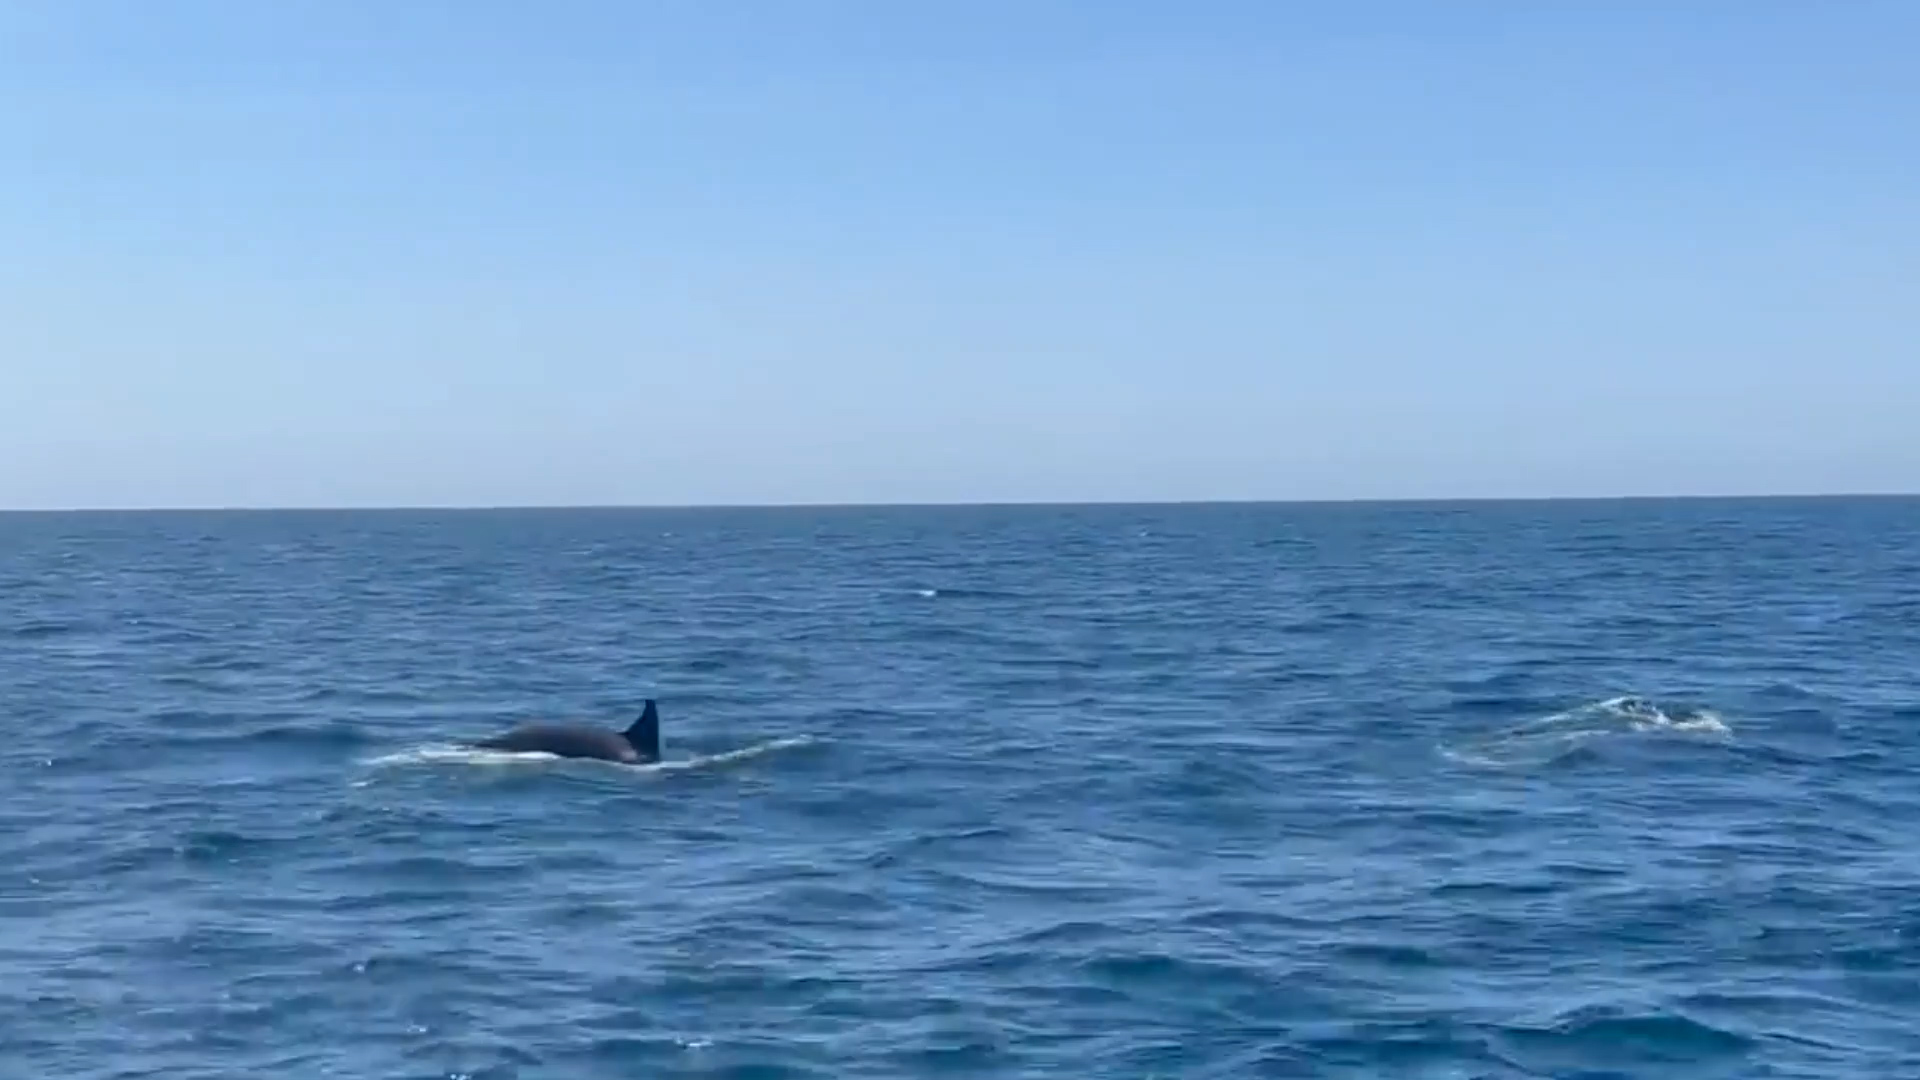 La tripulación de un velero experimentó momentos aterradores cuando fueron perseguidos por tres orcas